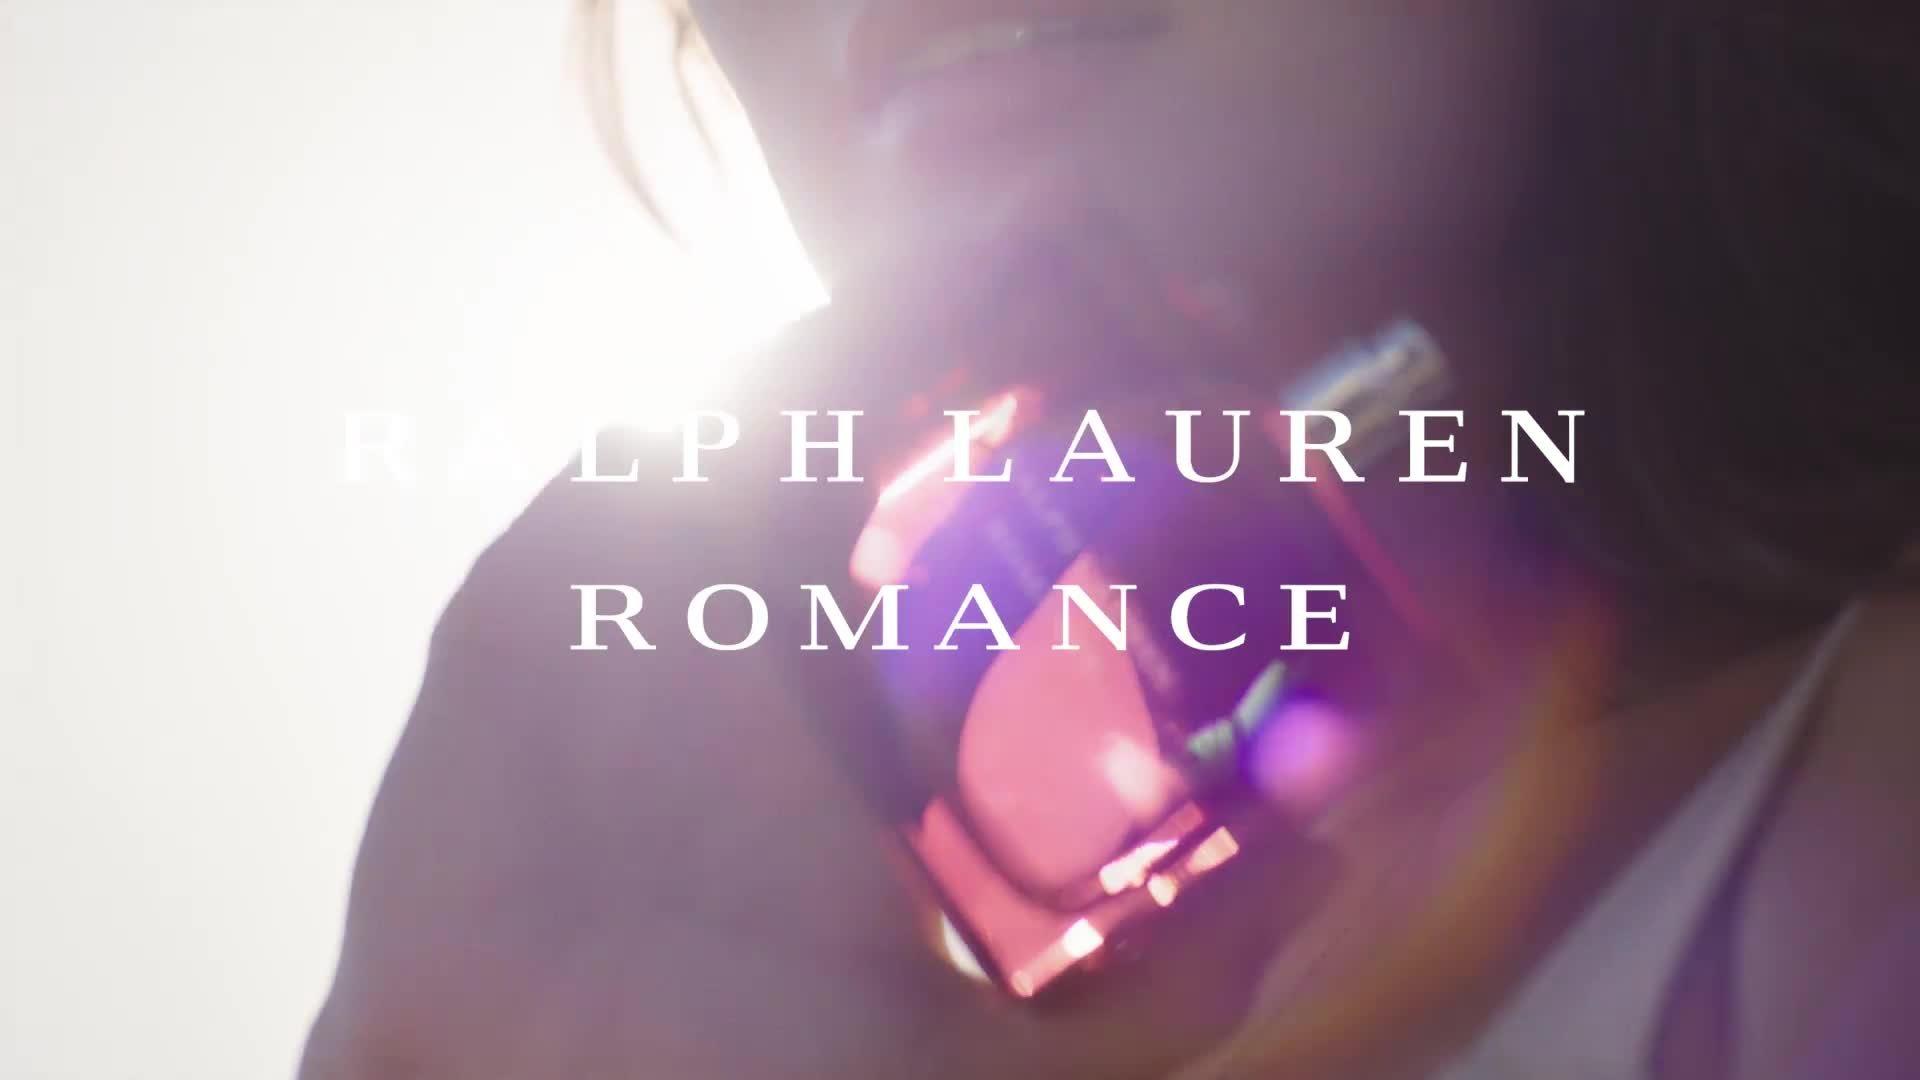 1.0 oz Romance Eau de Parfum Intense - Ralph Lauren